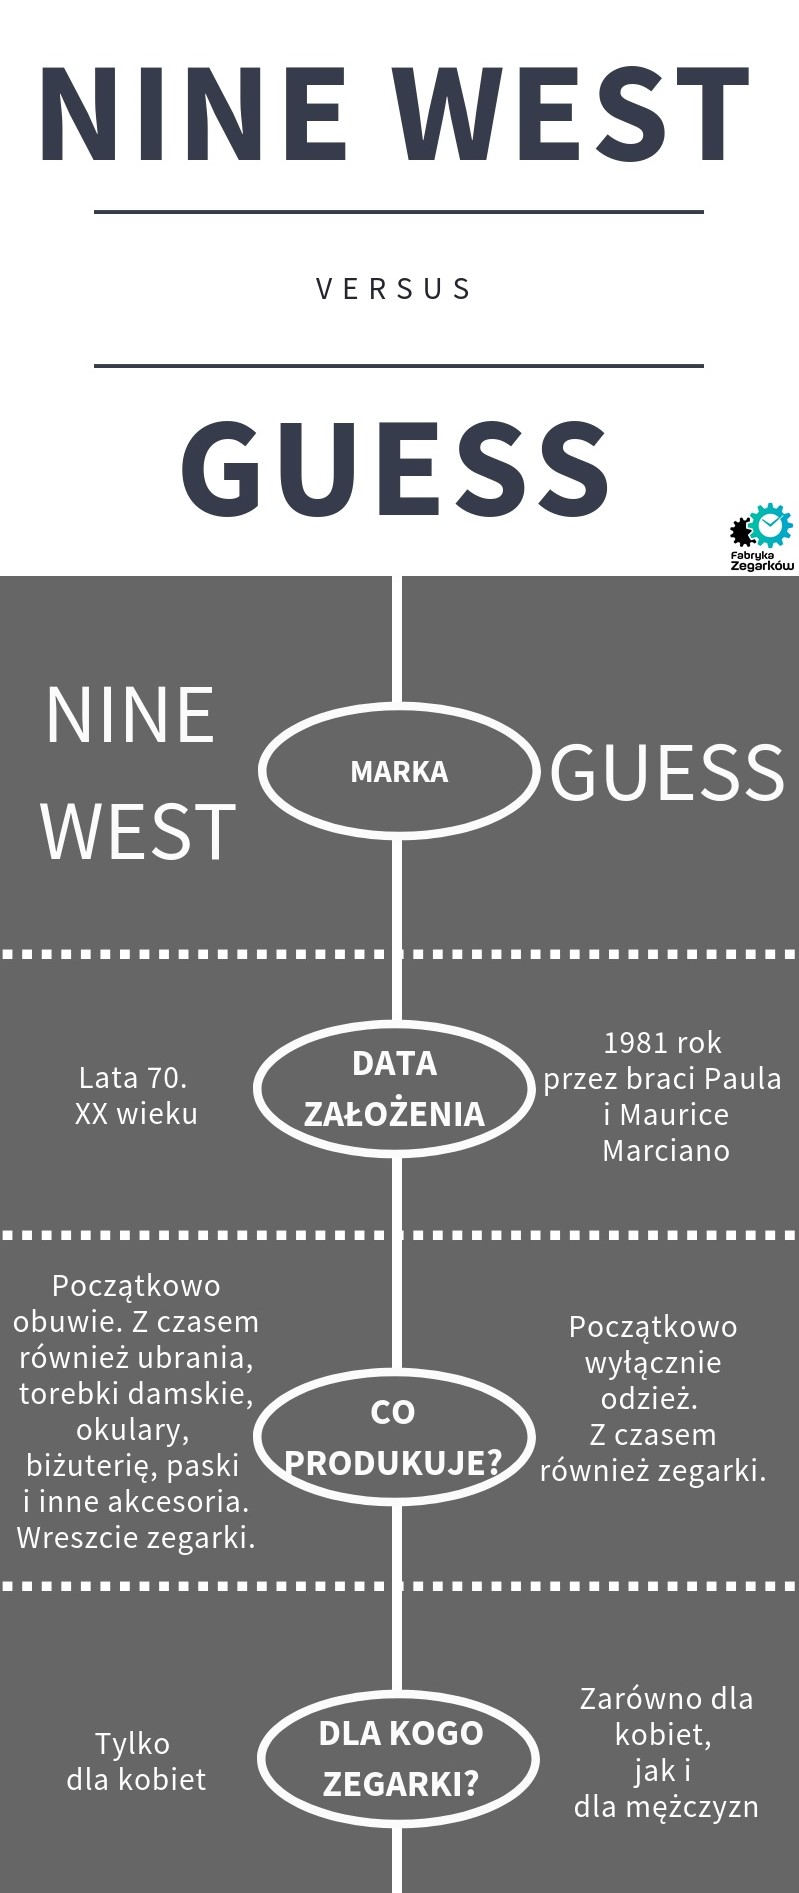 Nine West vs Guess - infografika